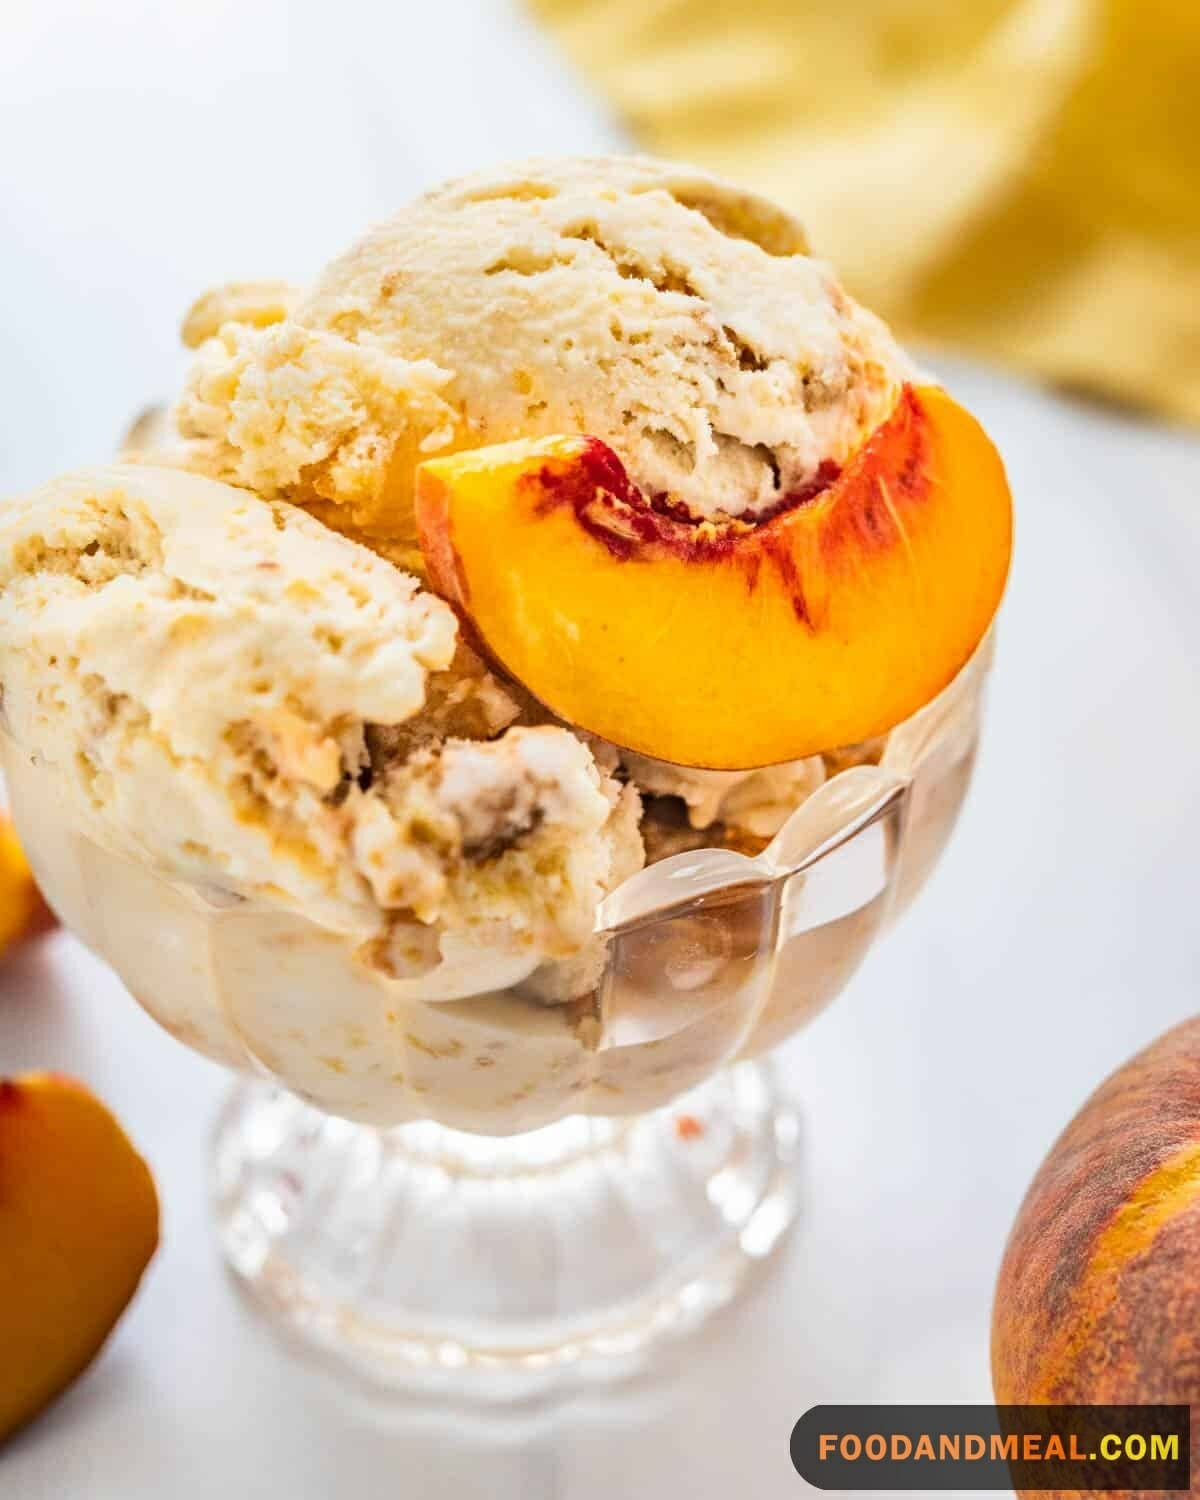 Divine Dessert Delight: Creating Artisanal Peach Ice Cream 4